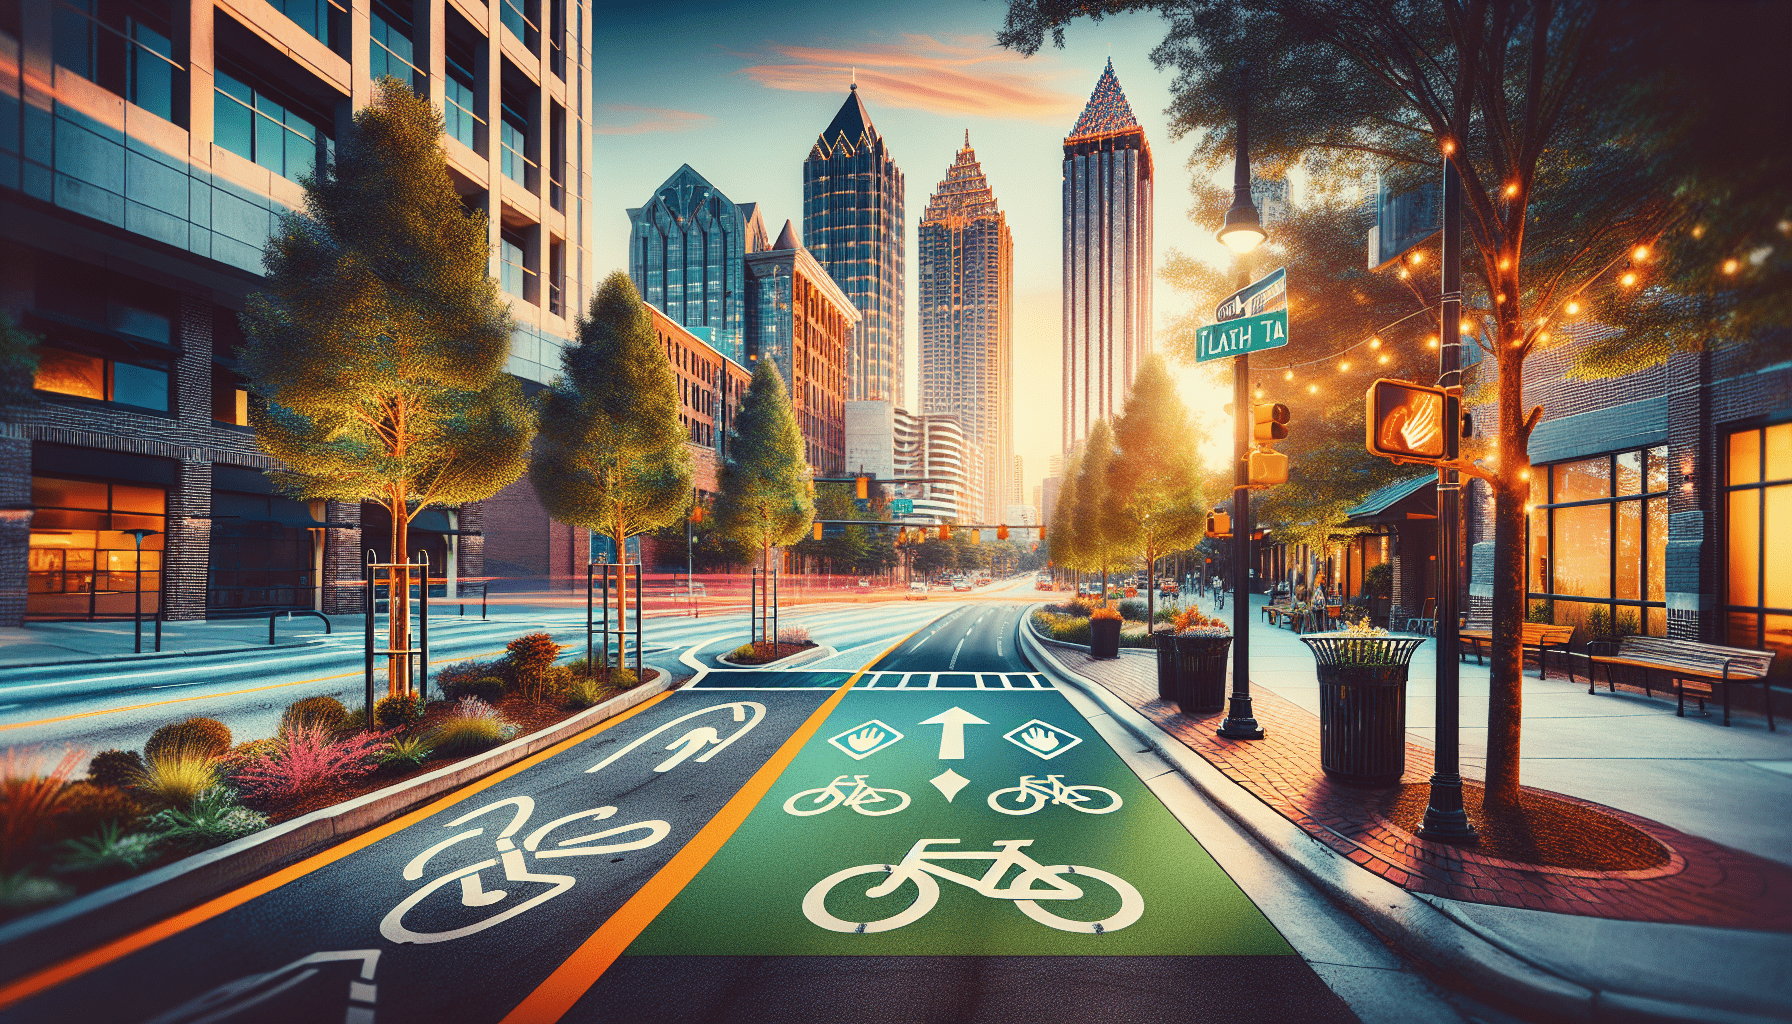 Does Atlanta Have Bike Lanes?